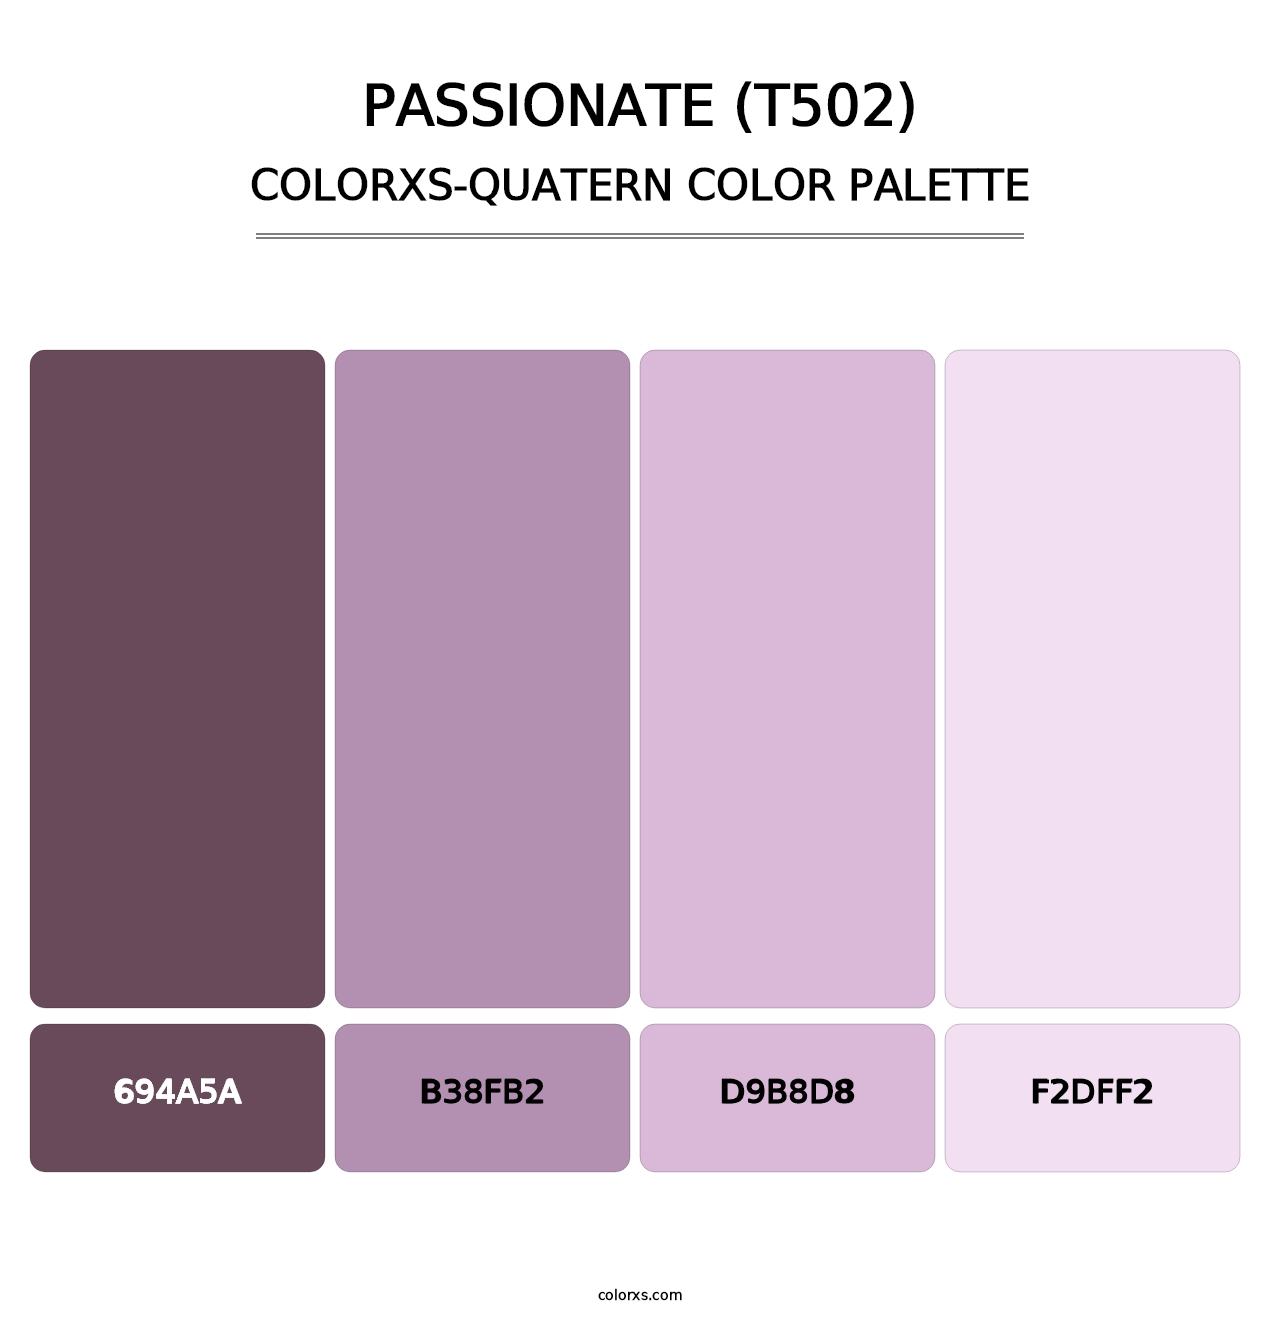 Passionate (T502) - Colorxs Quatern Palette